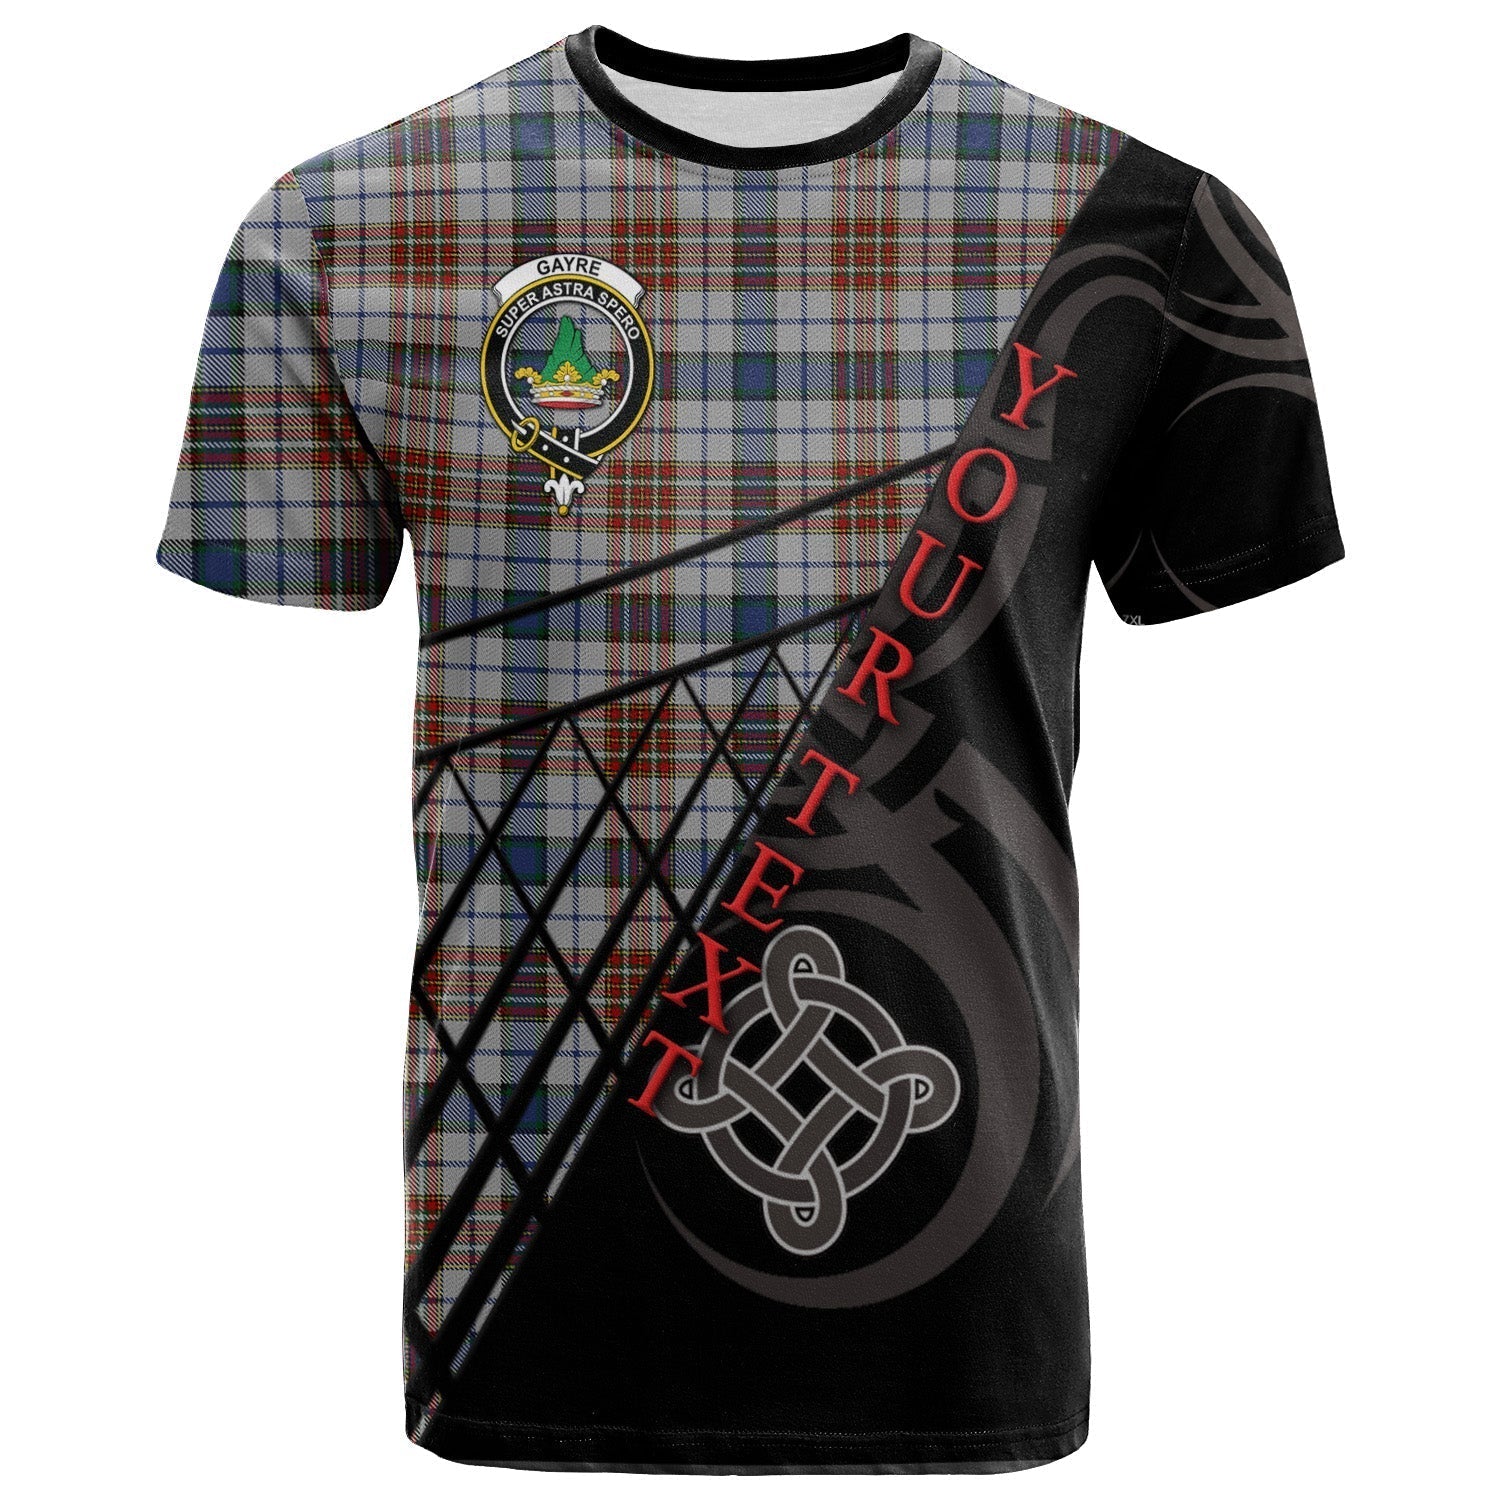 scottish-gayre-arisaidh-clan-crest-tartan-pattern-celtic-t-shirt